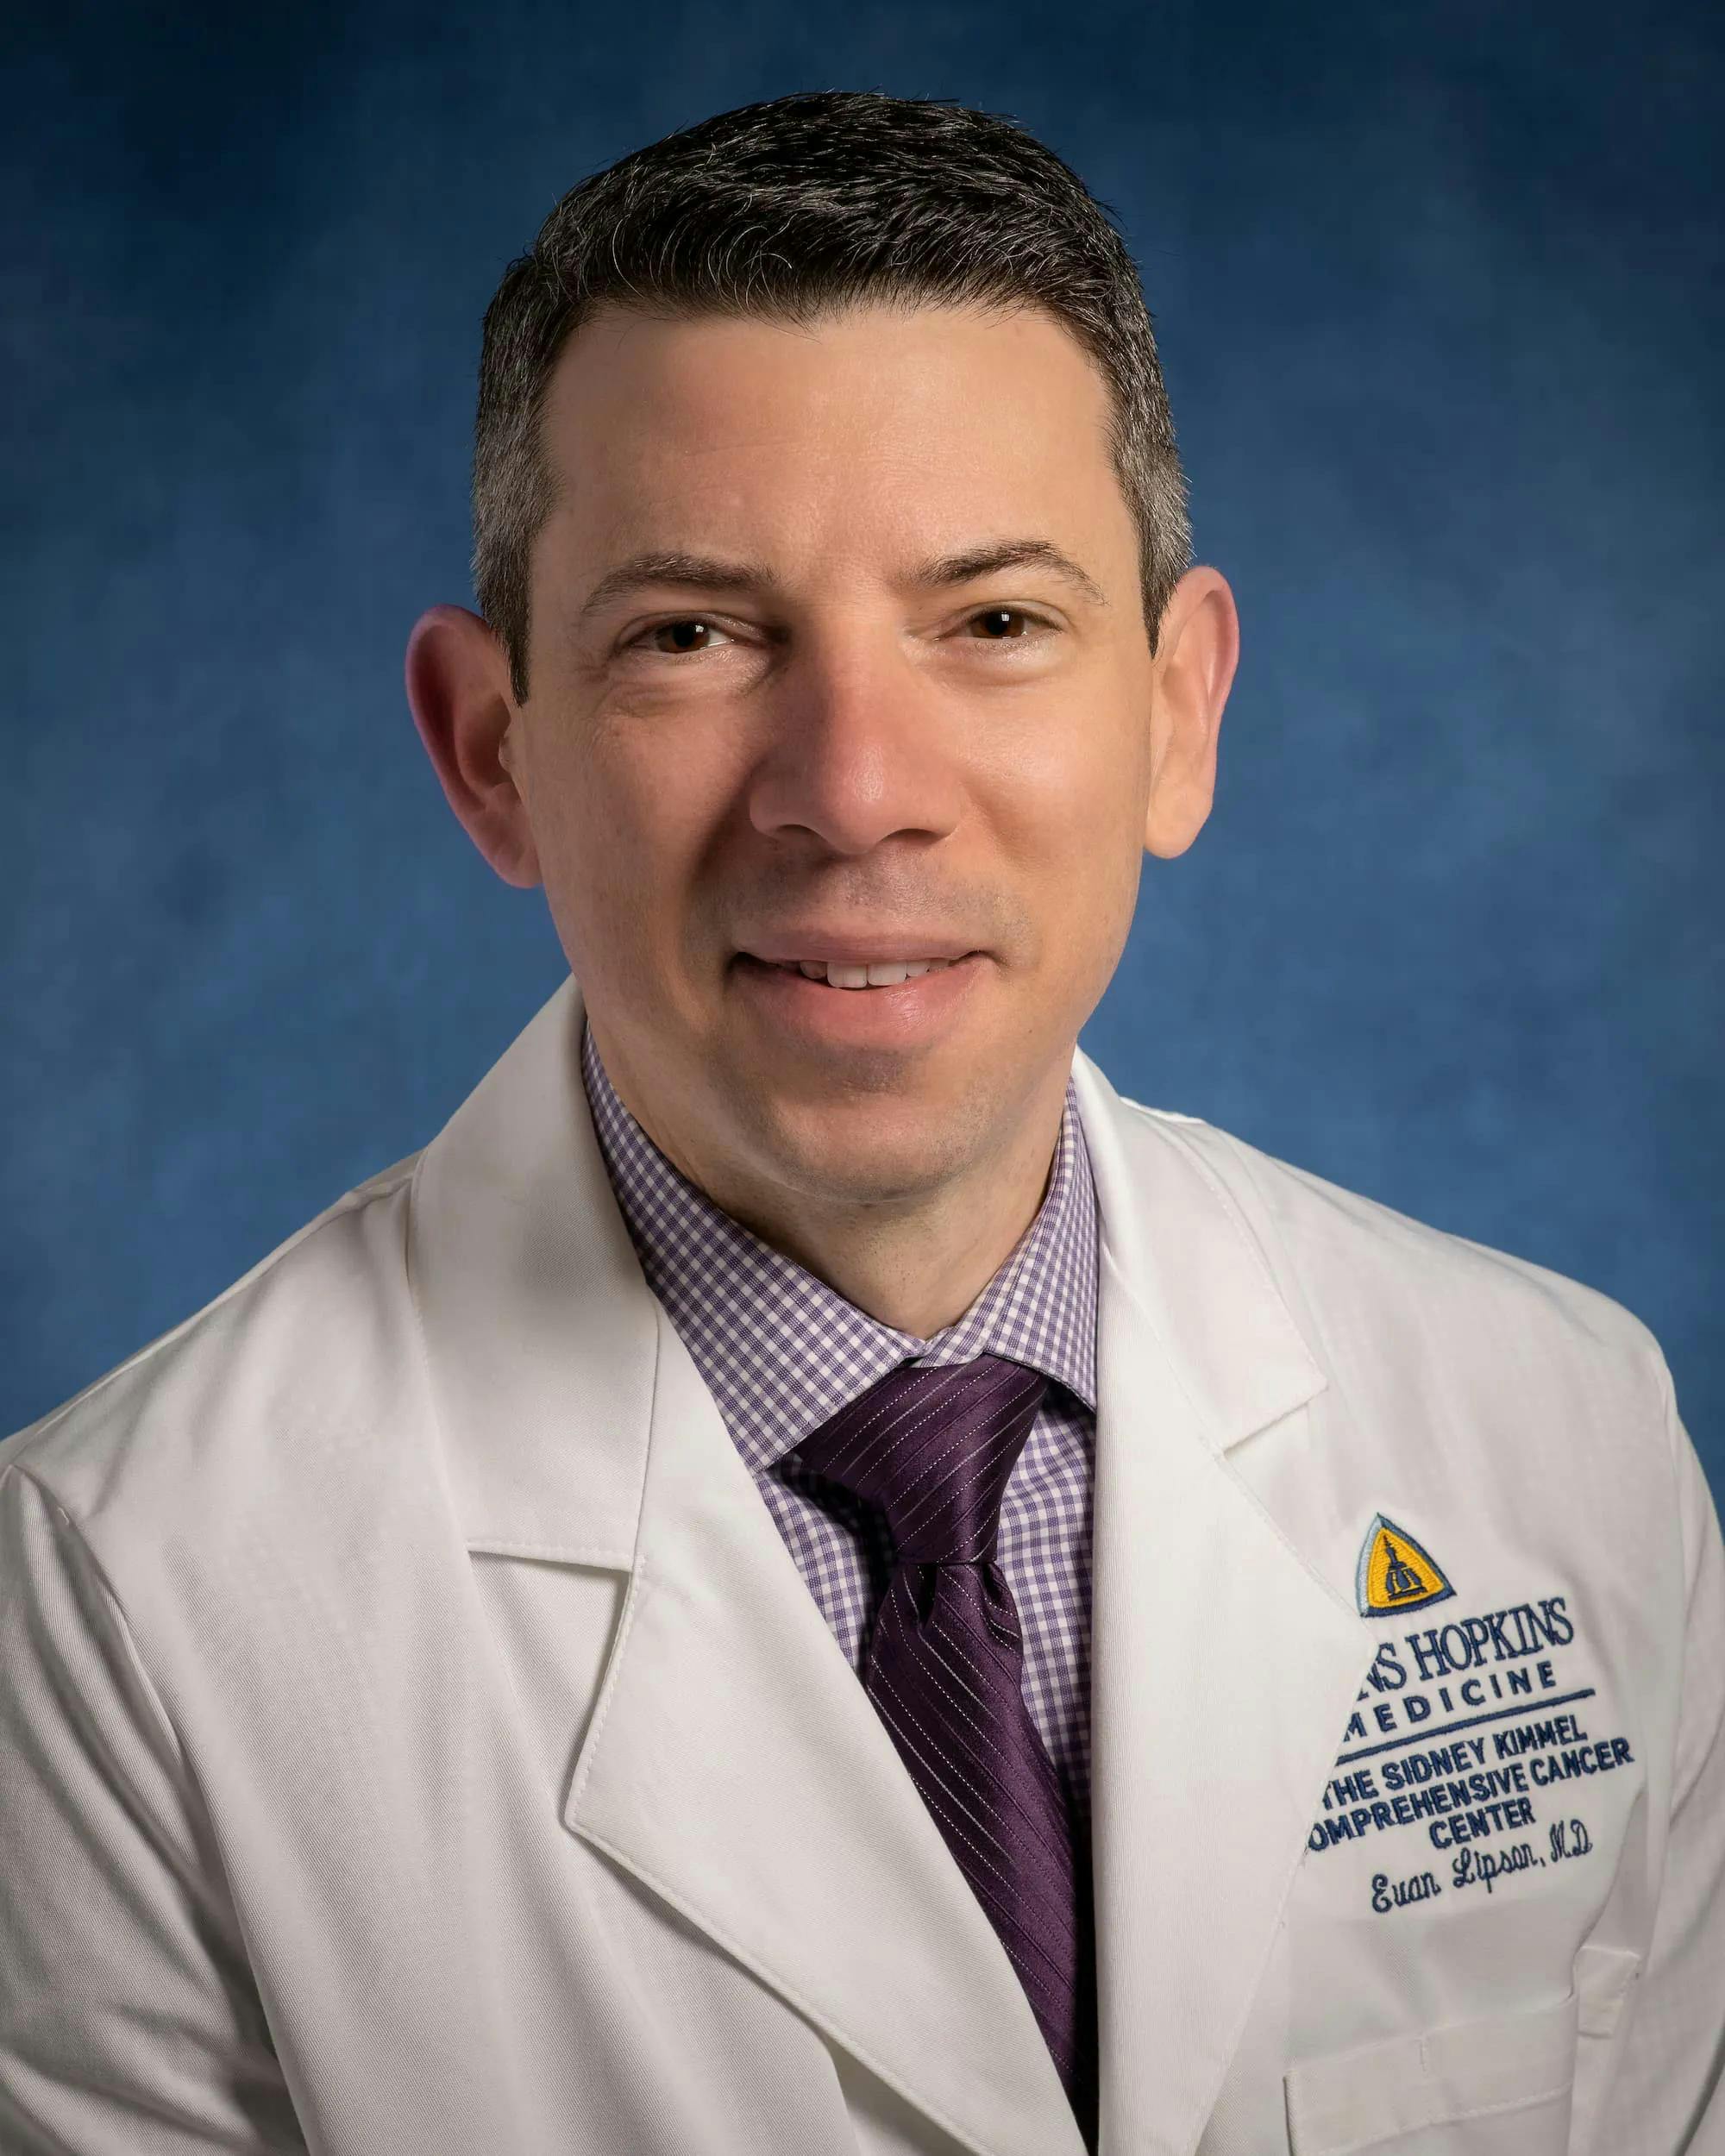 Evan J. Lipson, MD

Associate Professor of Oncology

Johns Hopkins Medicine

Baltimore, MD